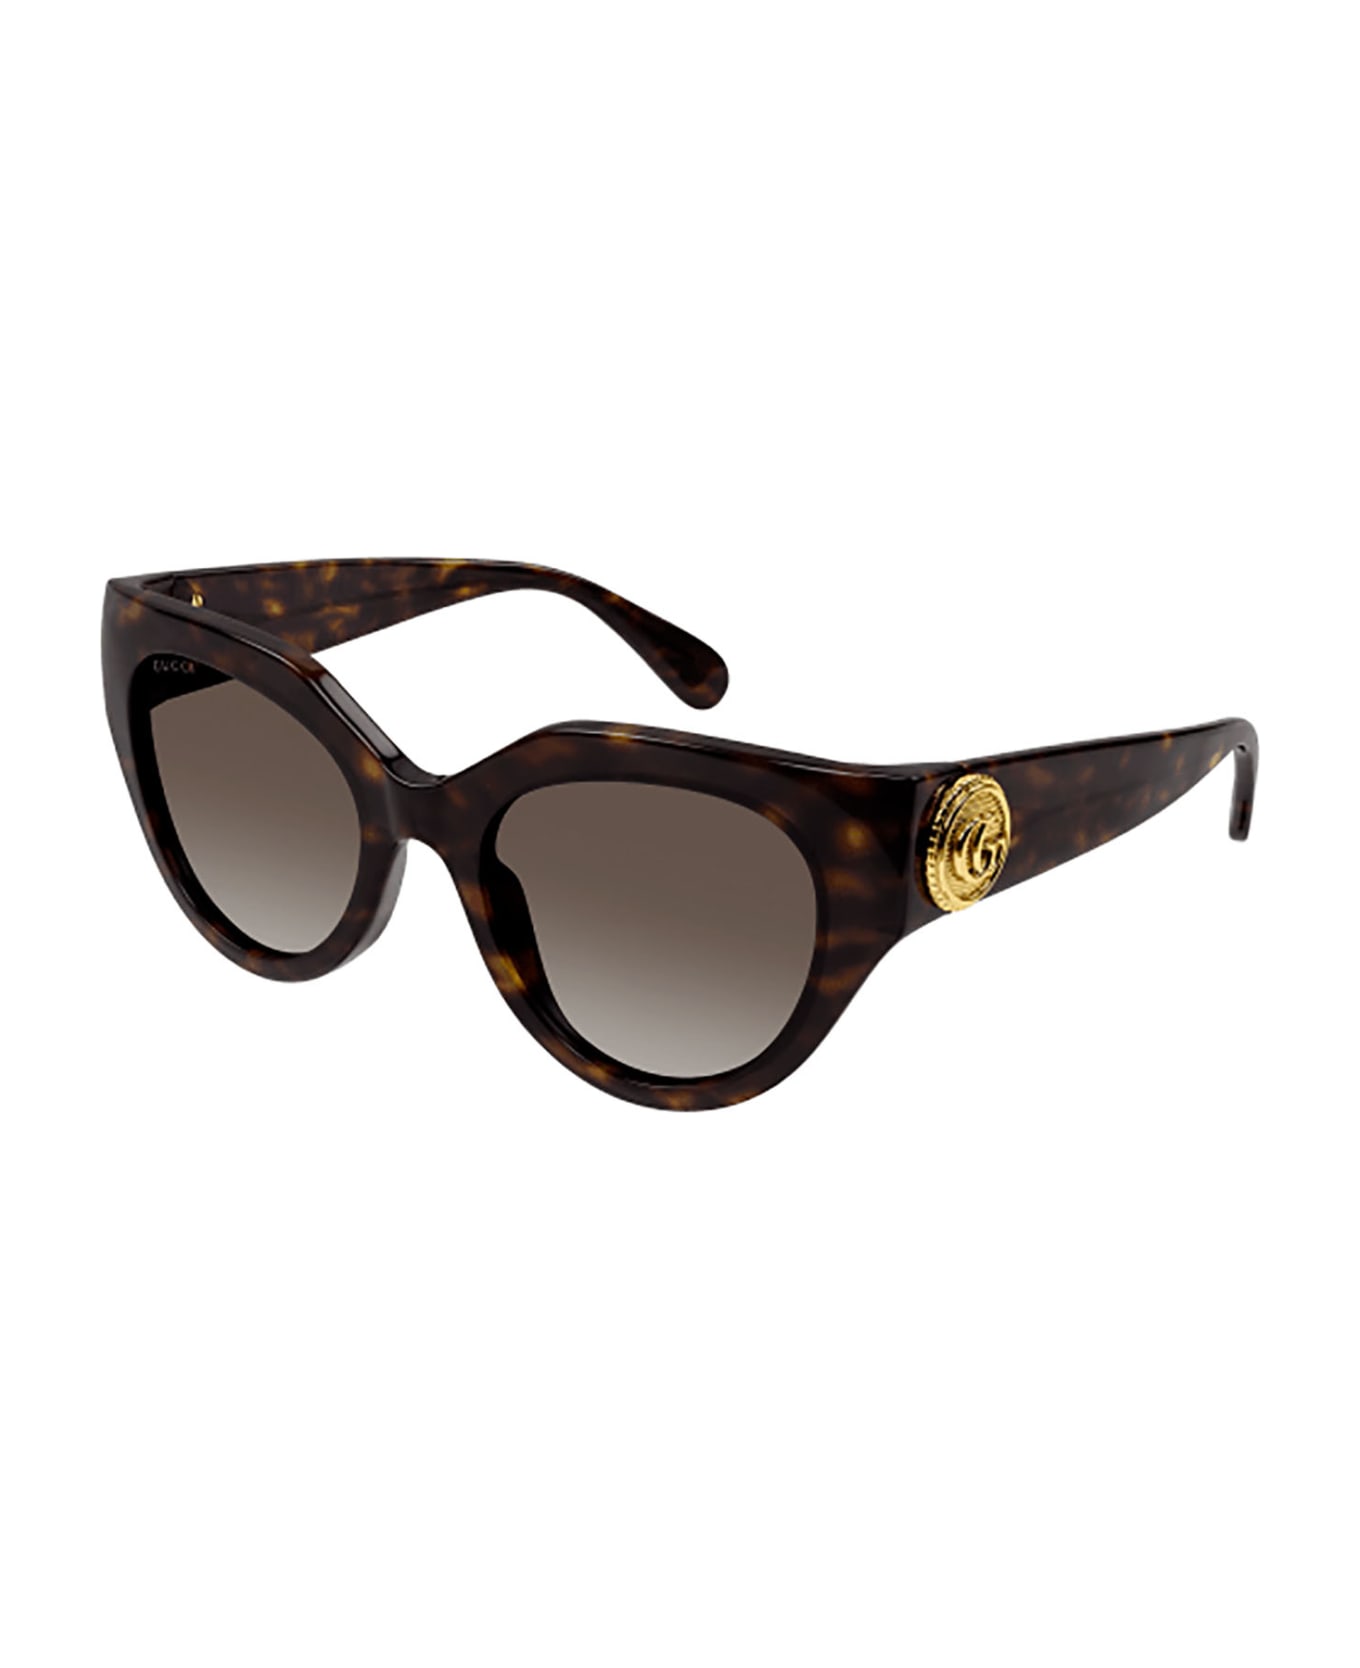 Gucci Eyewear GG1408S Sunglasses - Havana Havana Brown